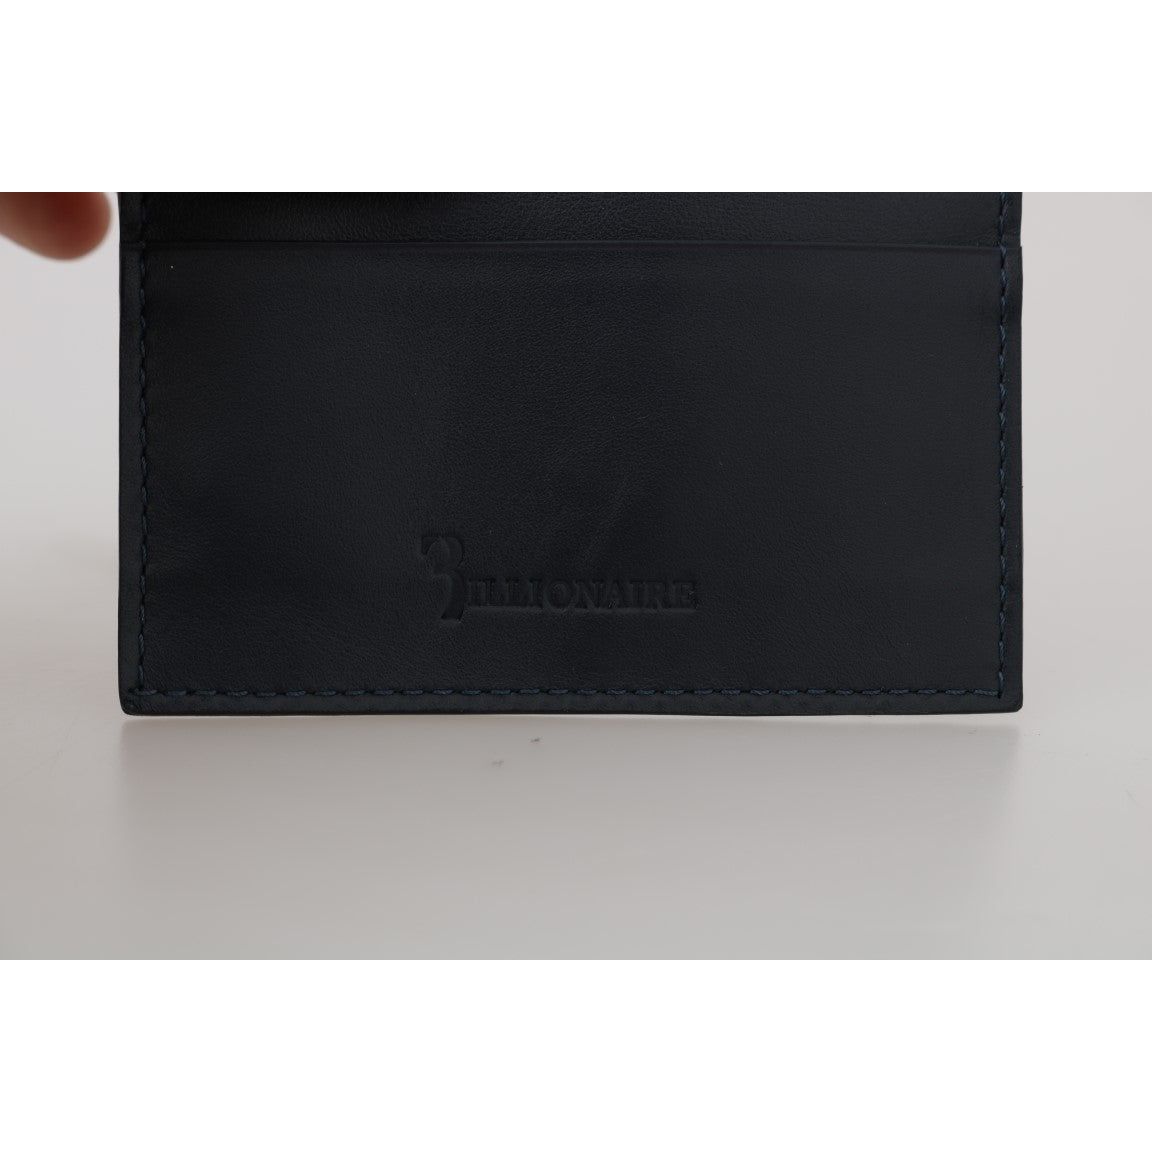 Billionaire Italian Couture Elegant Blue Leather Men's Wallet Wallet blue-leather-cardholder-wallet-1 463508-blue-leather-cardholder-wallet-4-3.jpg